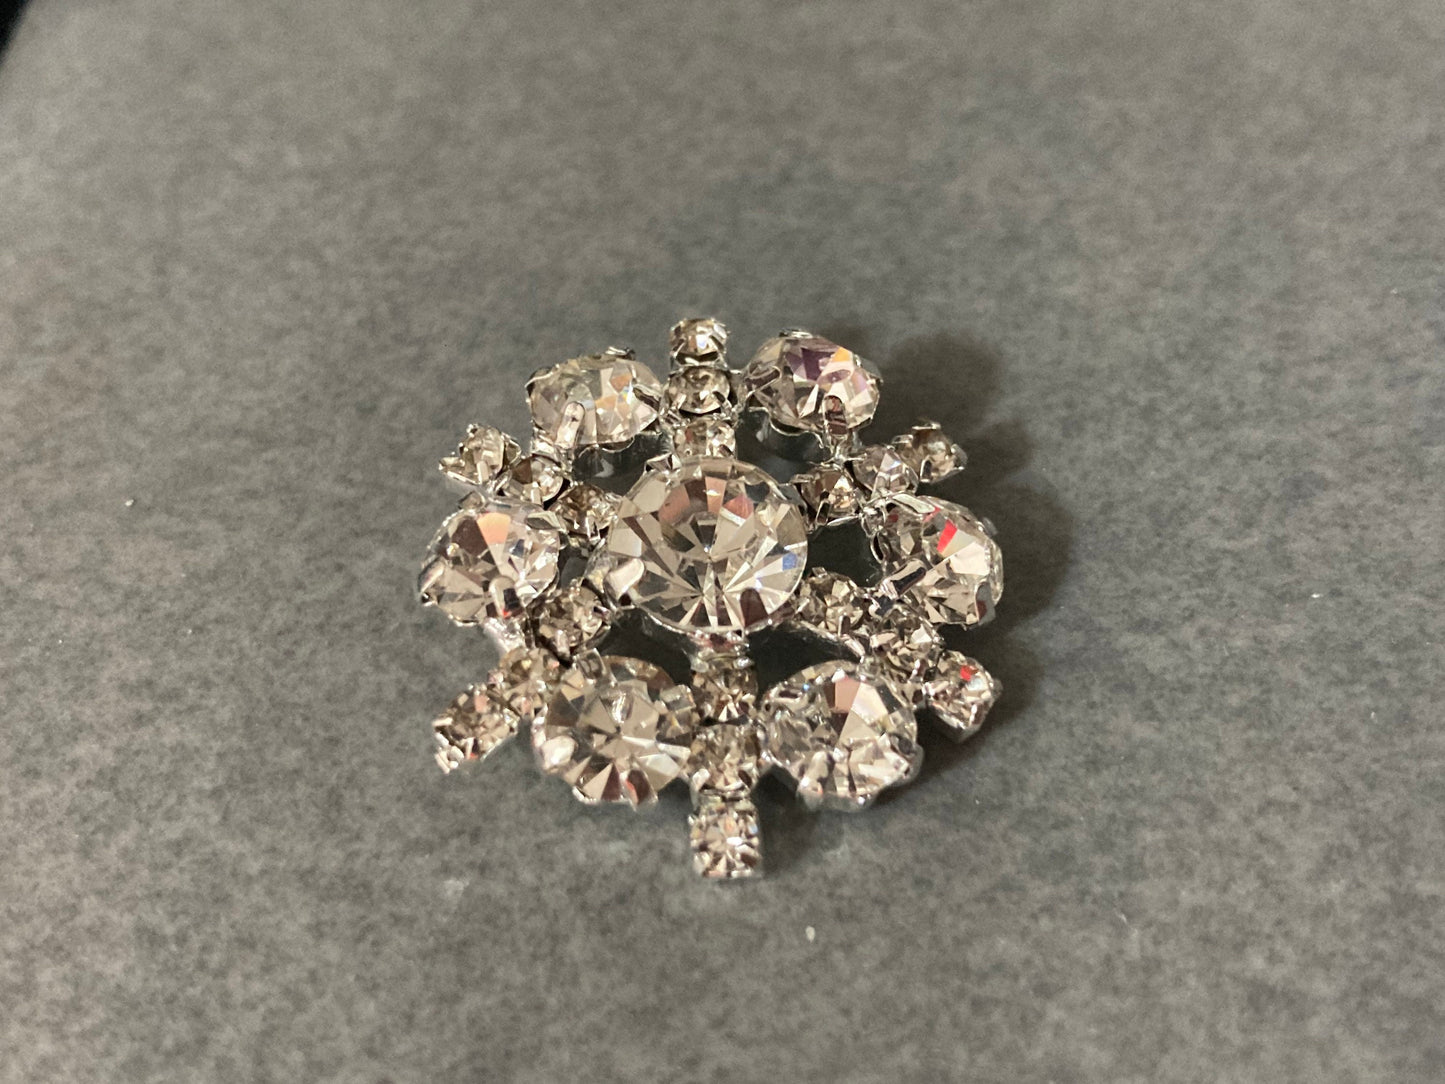 25mm Set of 5 round diamanté rhinestone buttons snowflake